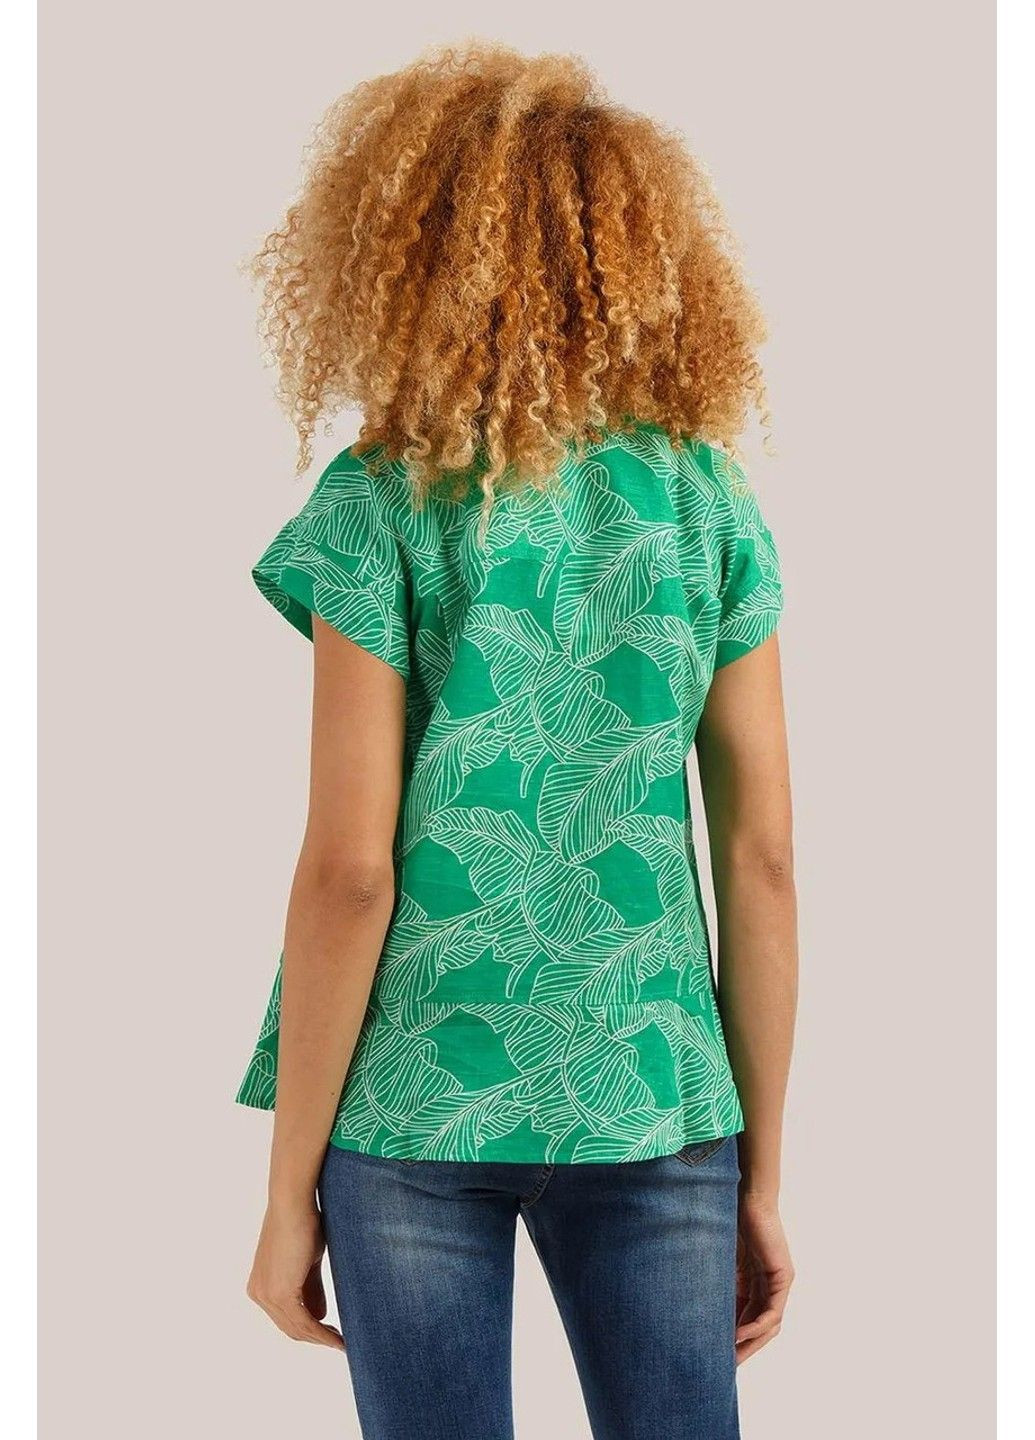 Зелена літня блузка s19-12047-500 Finn Flare